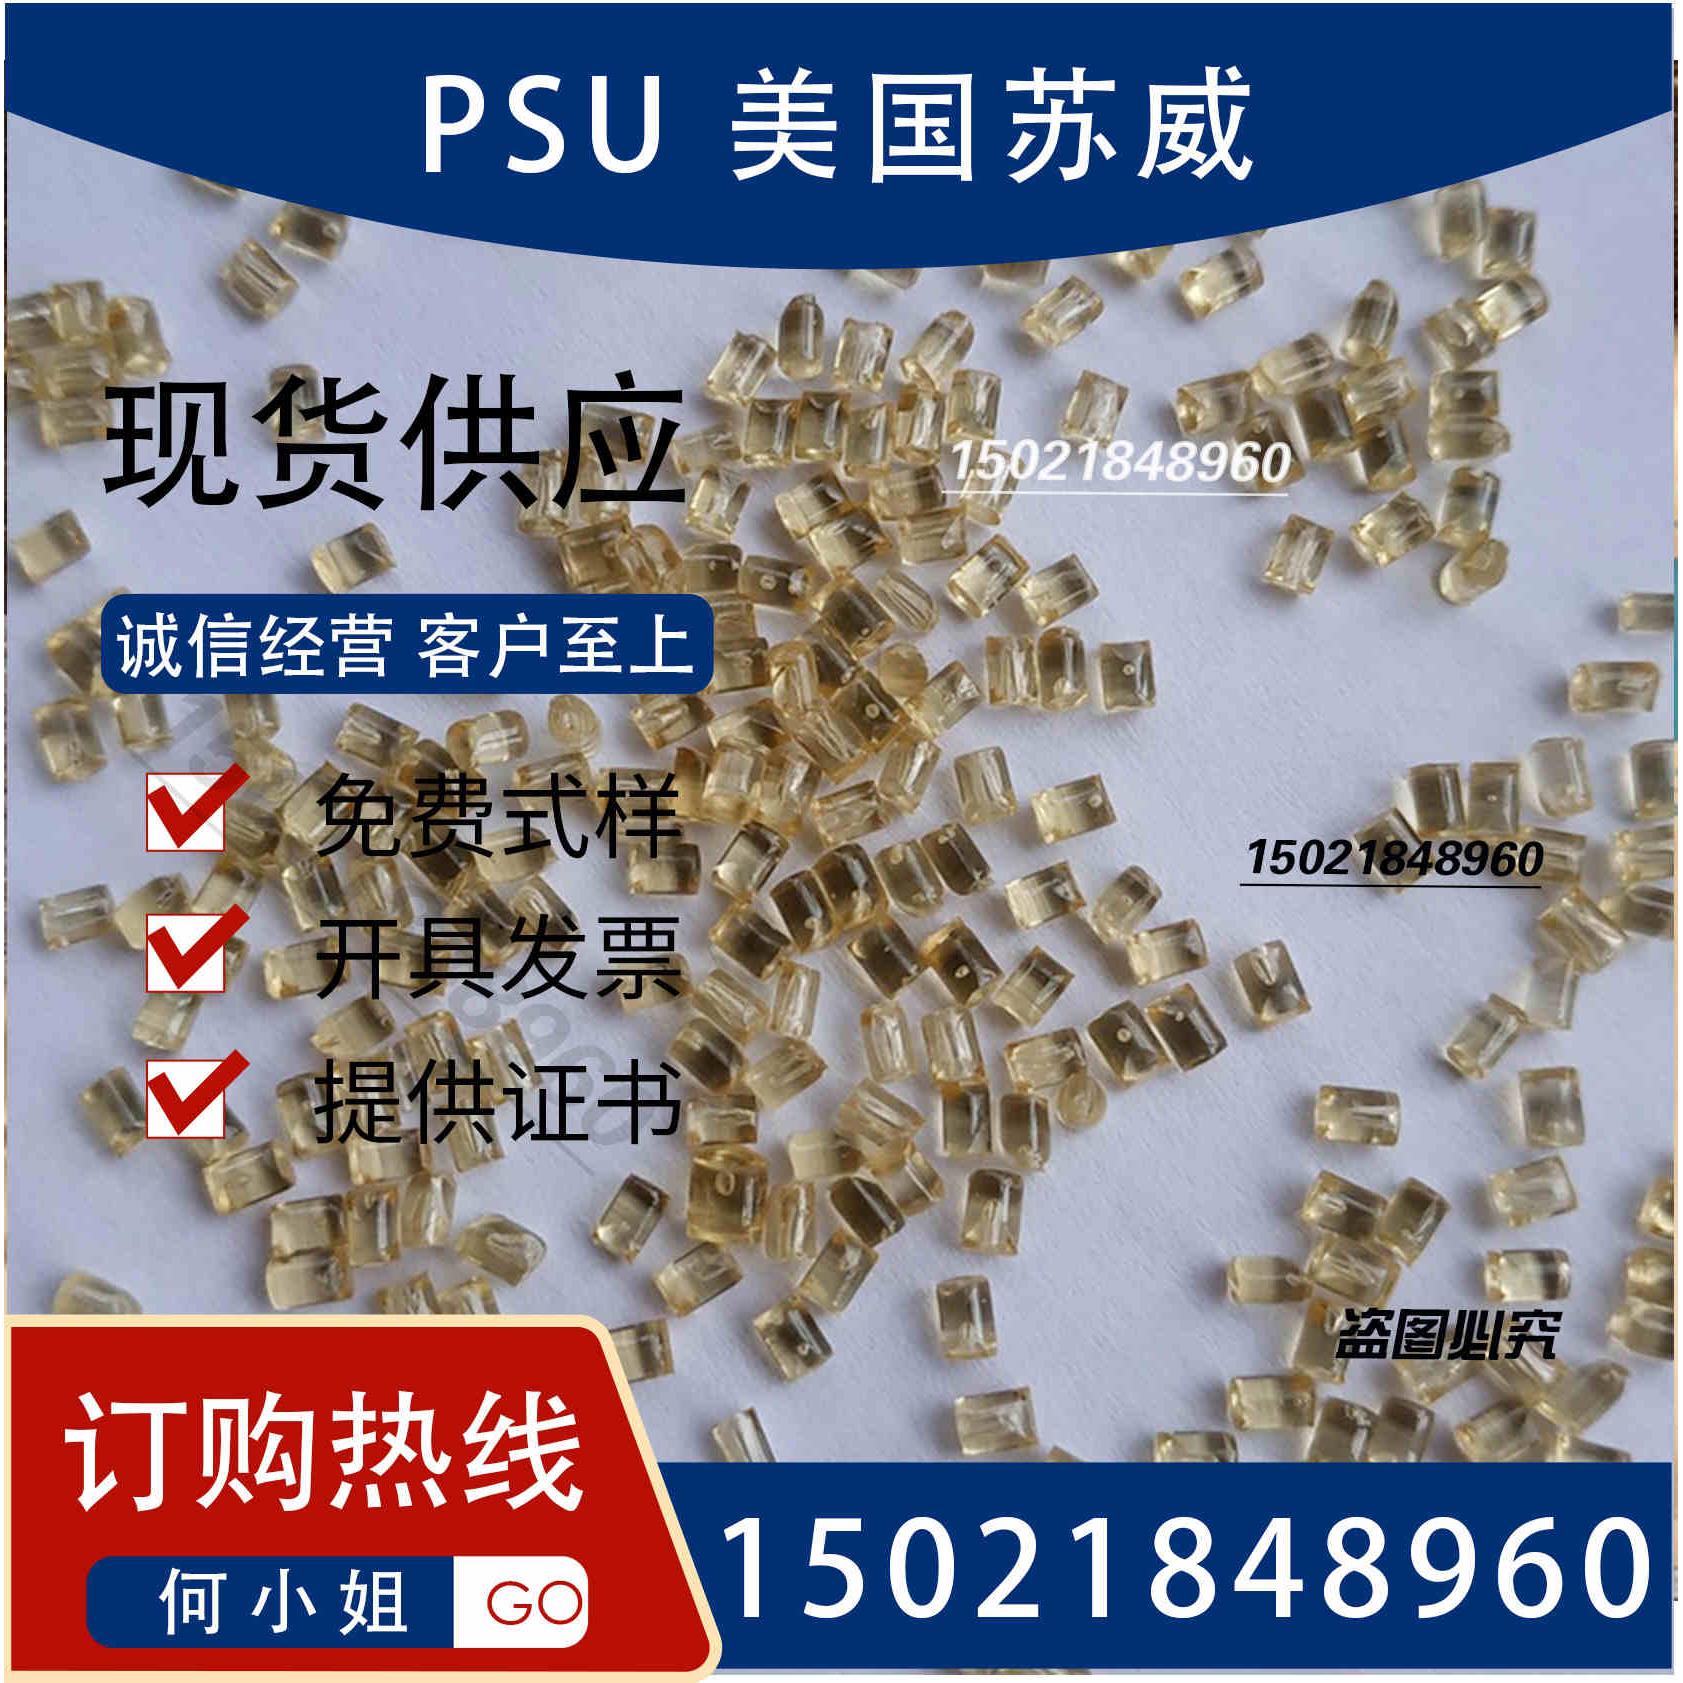 PSU美国苏威PSU P-3500注塑级聚砜 PSU透明级 高耐热聚砜耐水解 - 图1